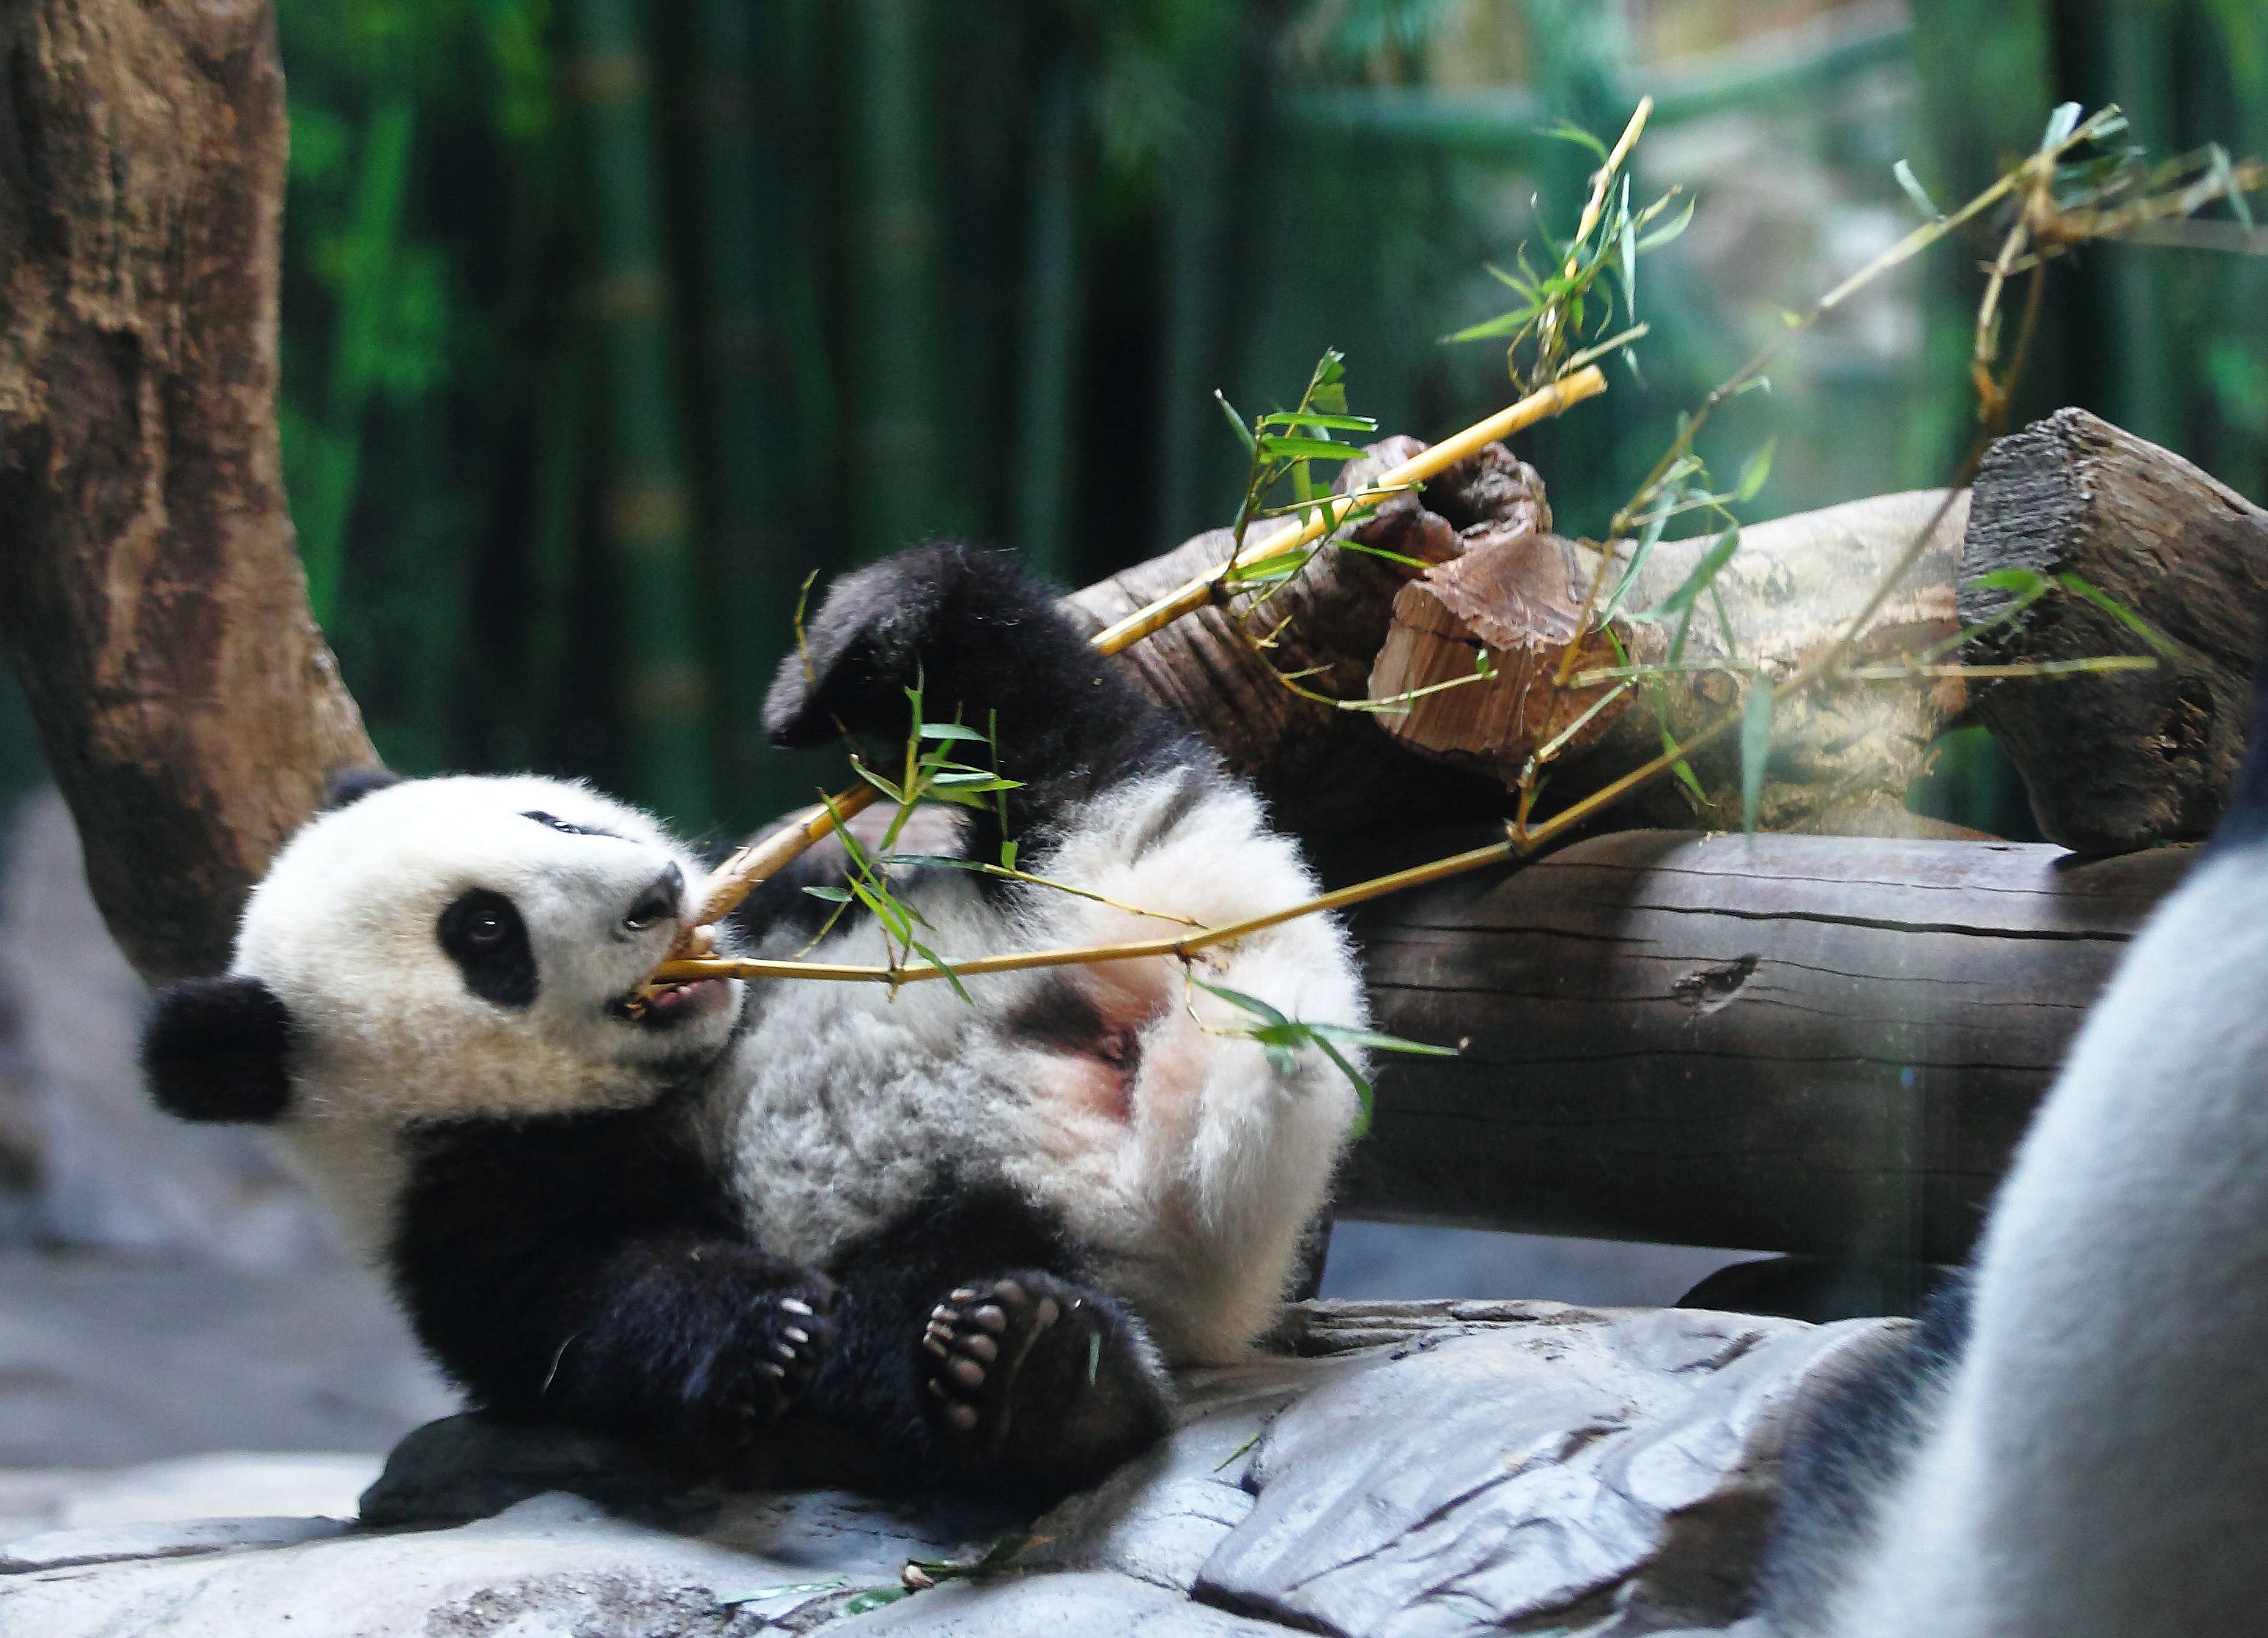 global-warming-expected-to-drastically-reduce-giant-panda-habitat-cbs